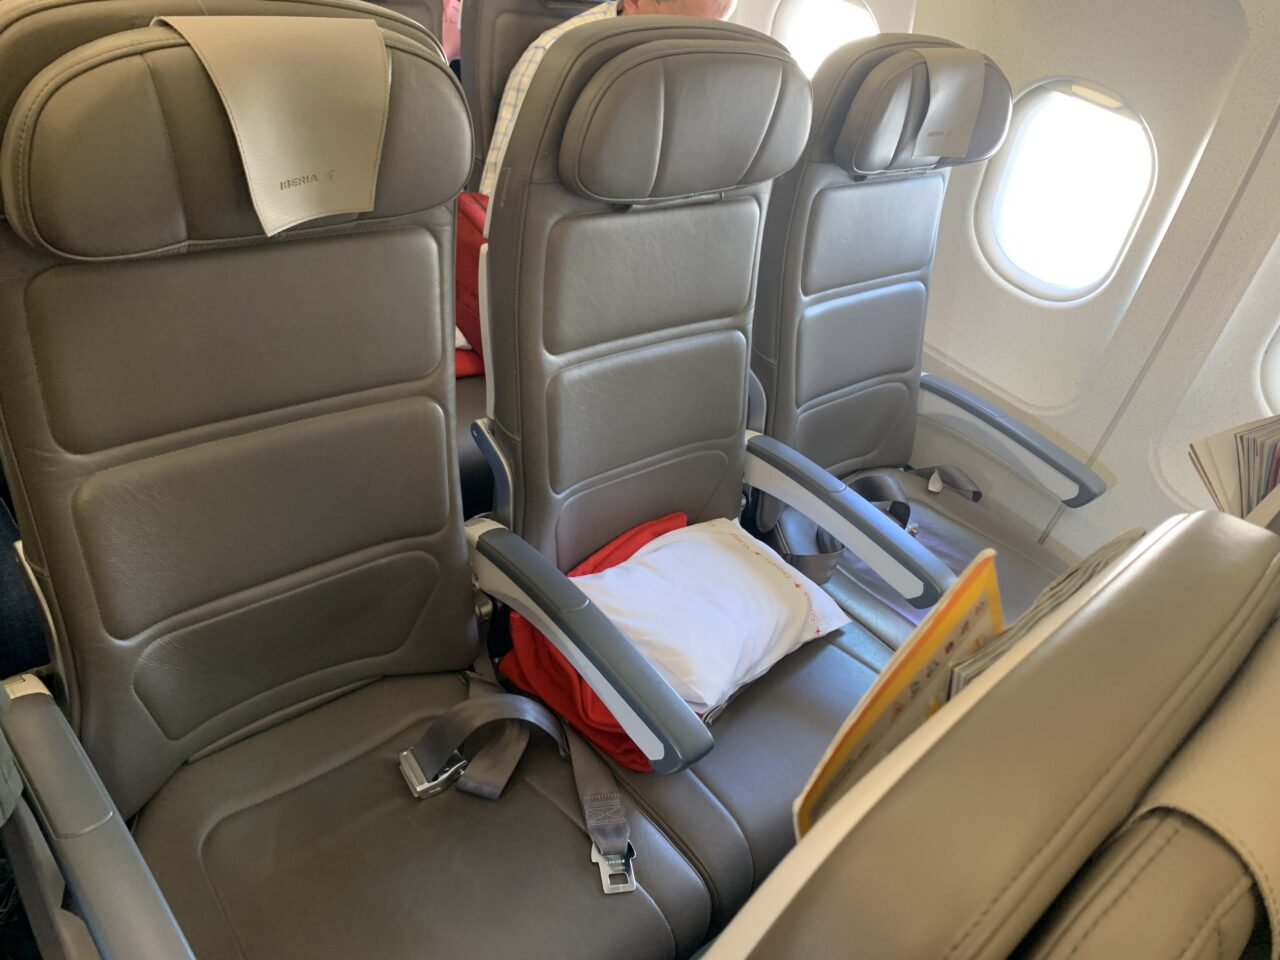 Iberia A320 Business Class Seat